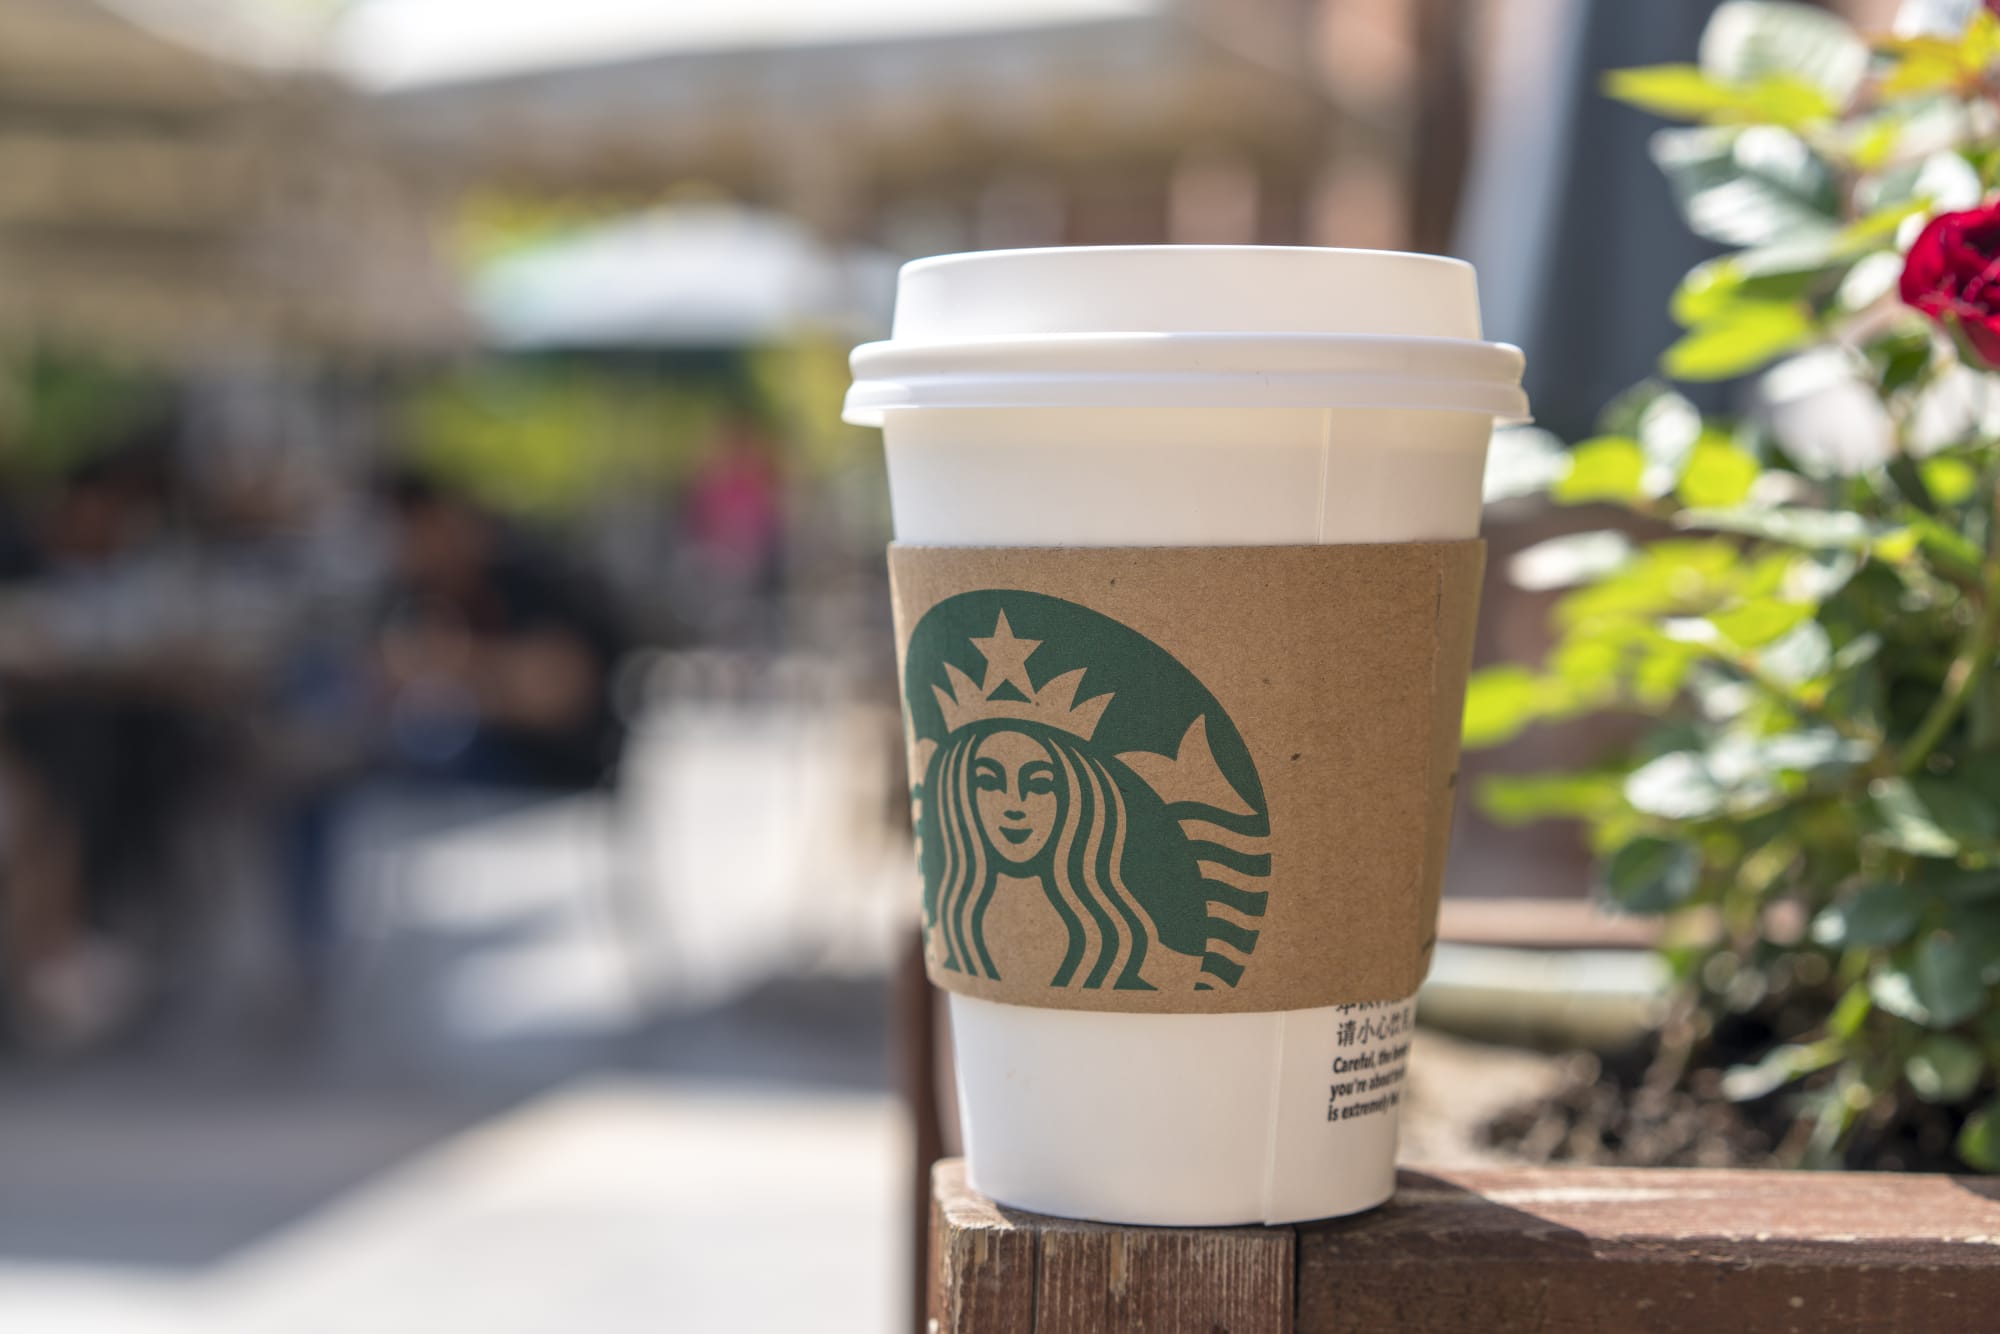 Is Starbucks open on Memorial Day?